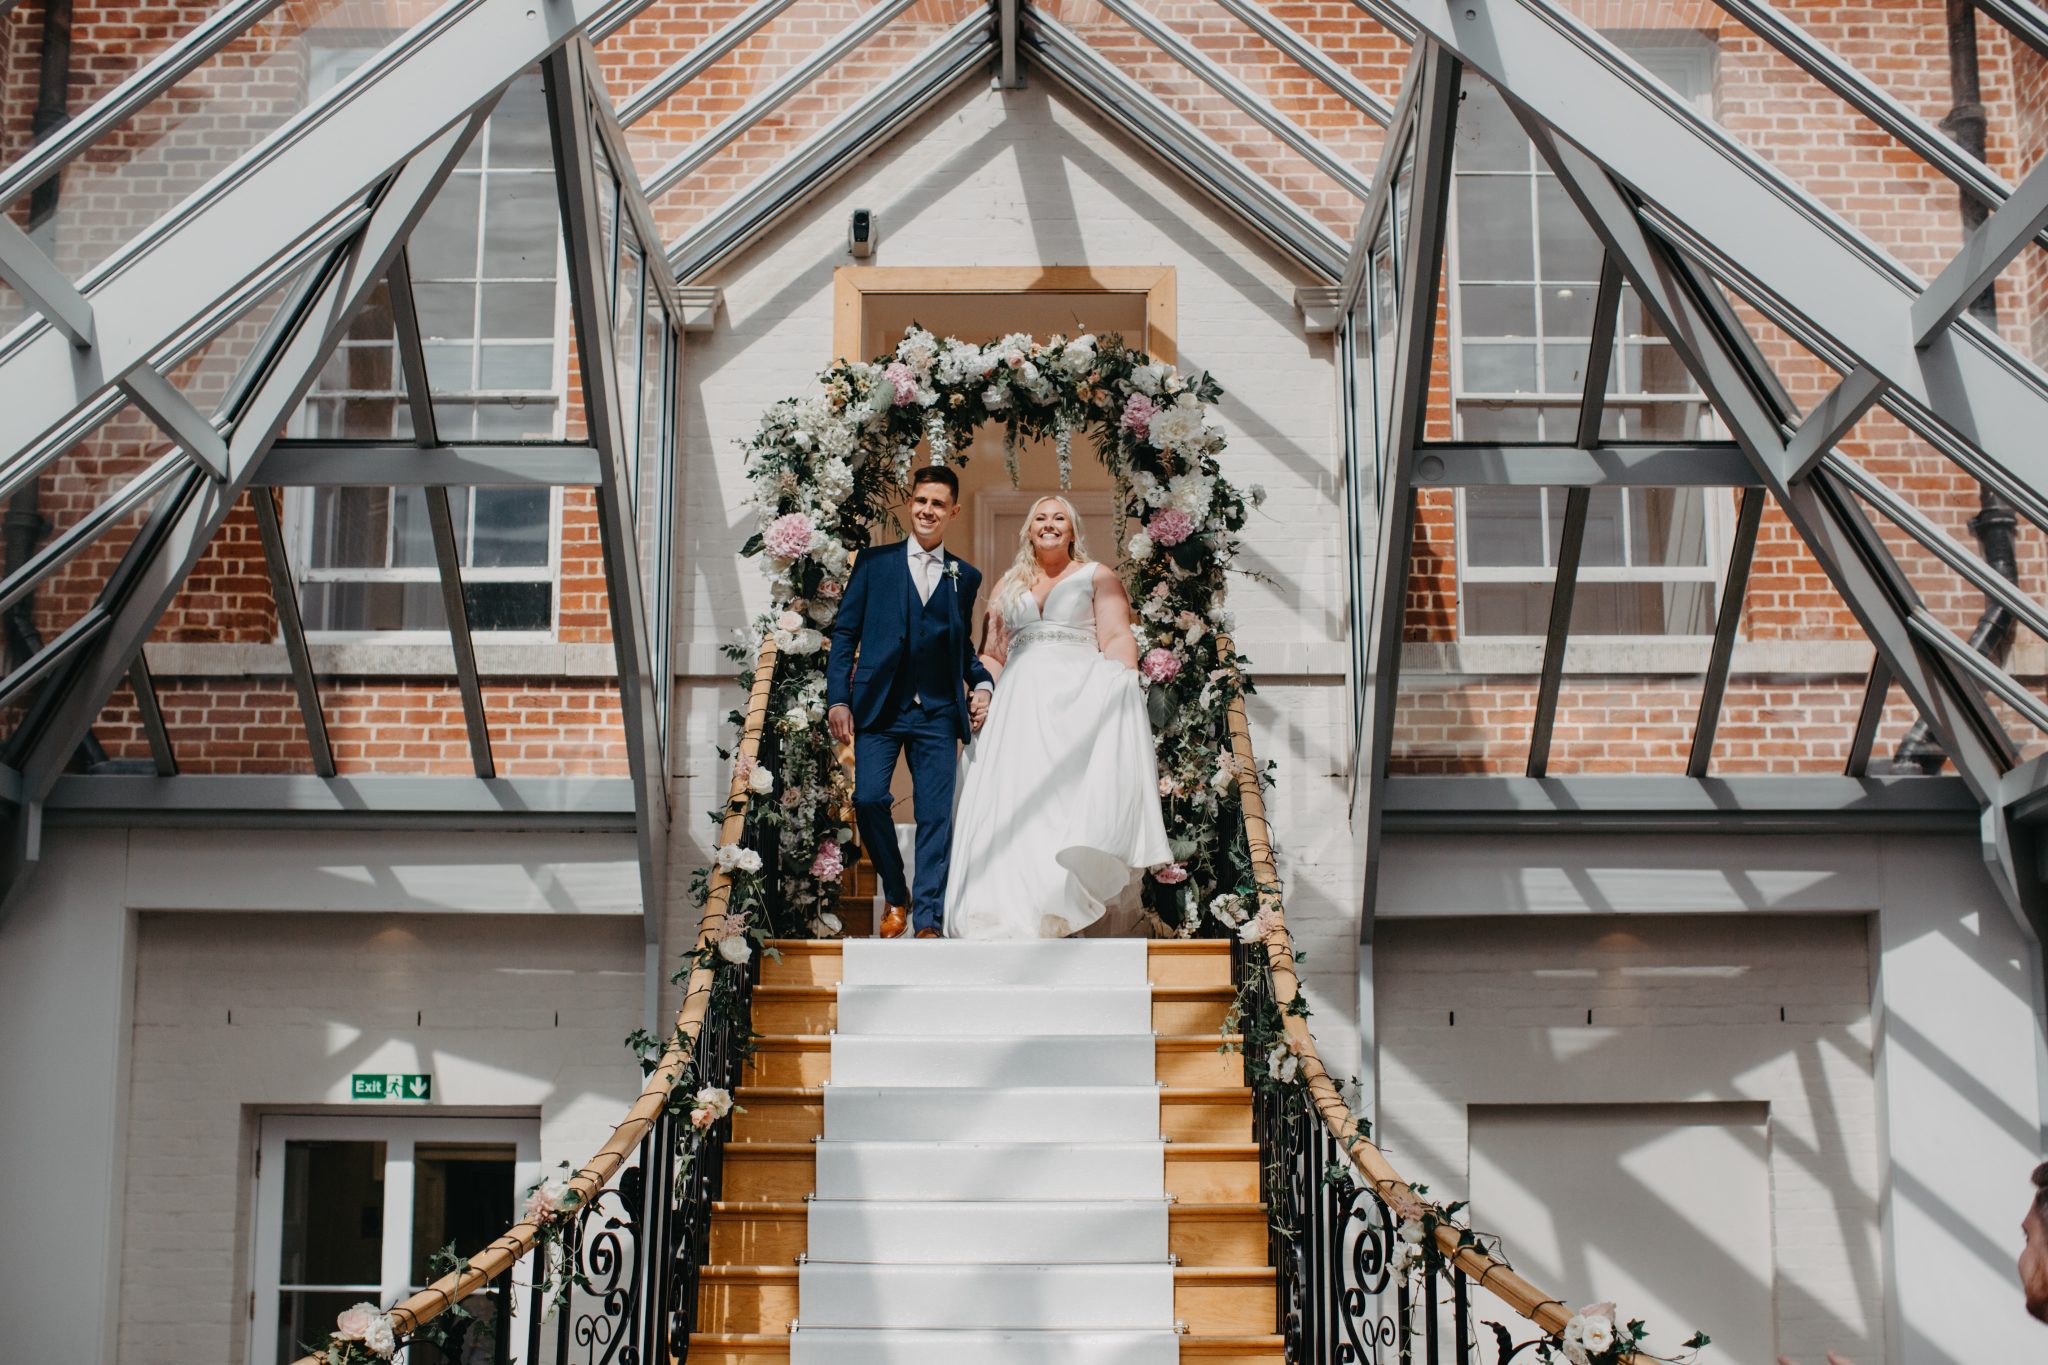 Kirsty & Tom’s wedding at Botleys Mansion